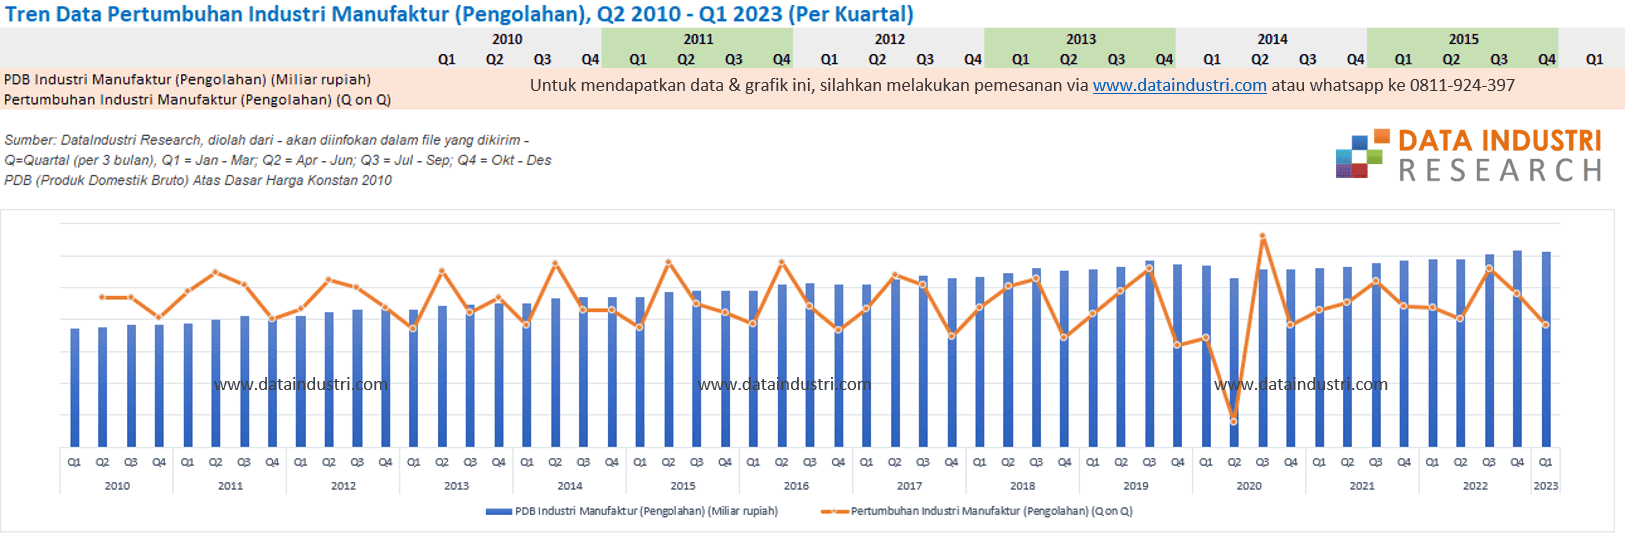 Tren Data Pertumbuhan Industri Manufaktur (Pengolahan), Q2 2010 - Q1 2023 (Per Kuartal)